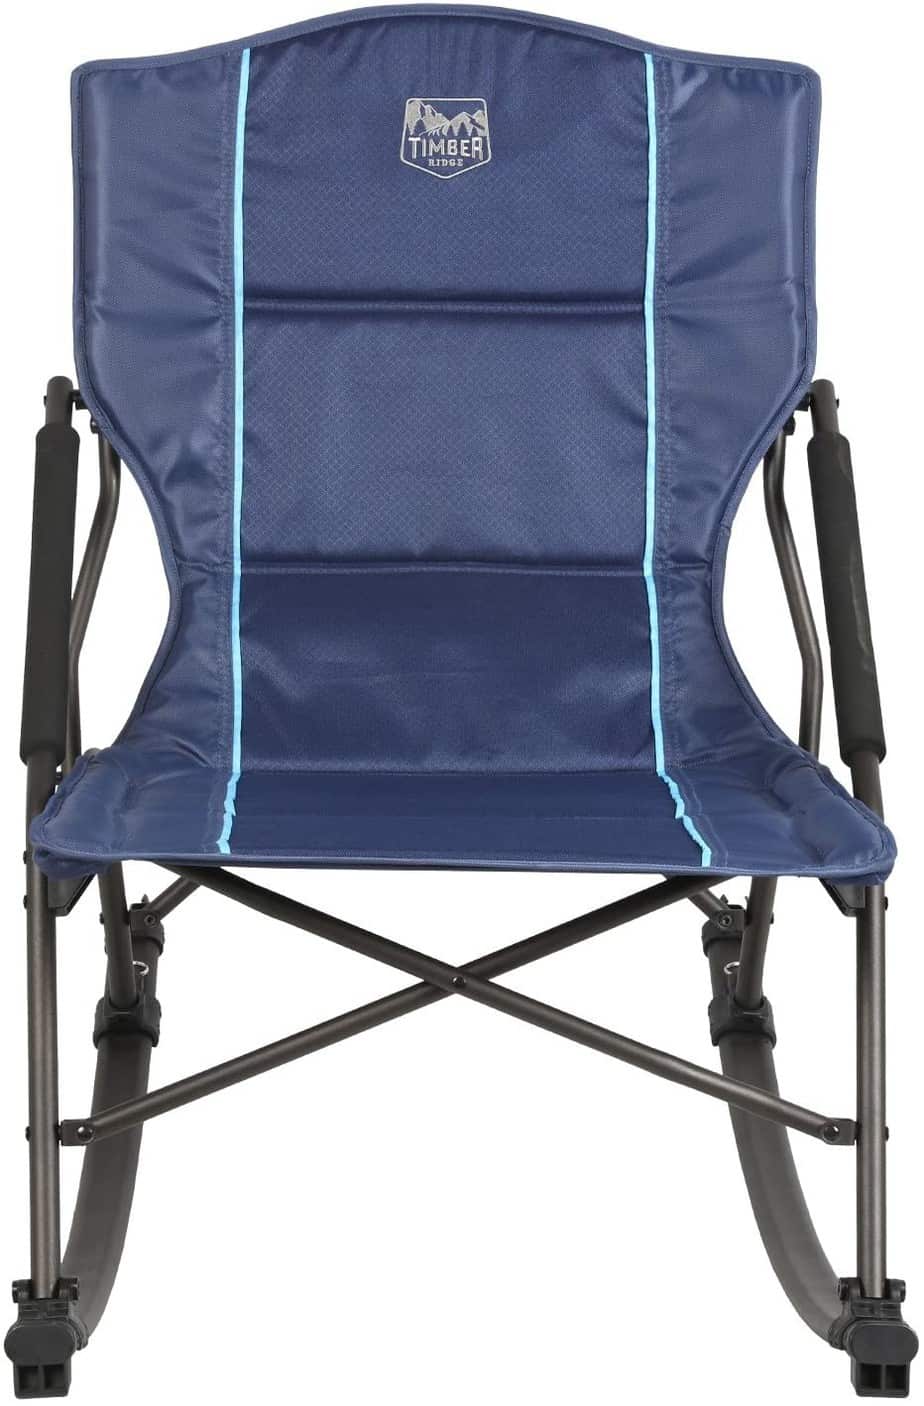 2. Timber Ridge Catalpa Relax & Rock Chair